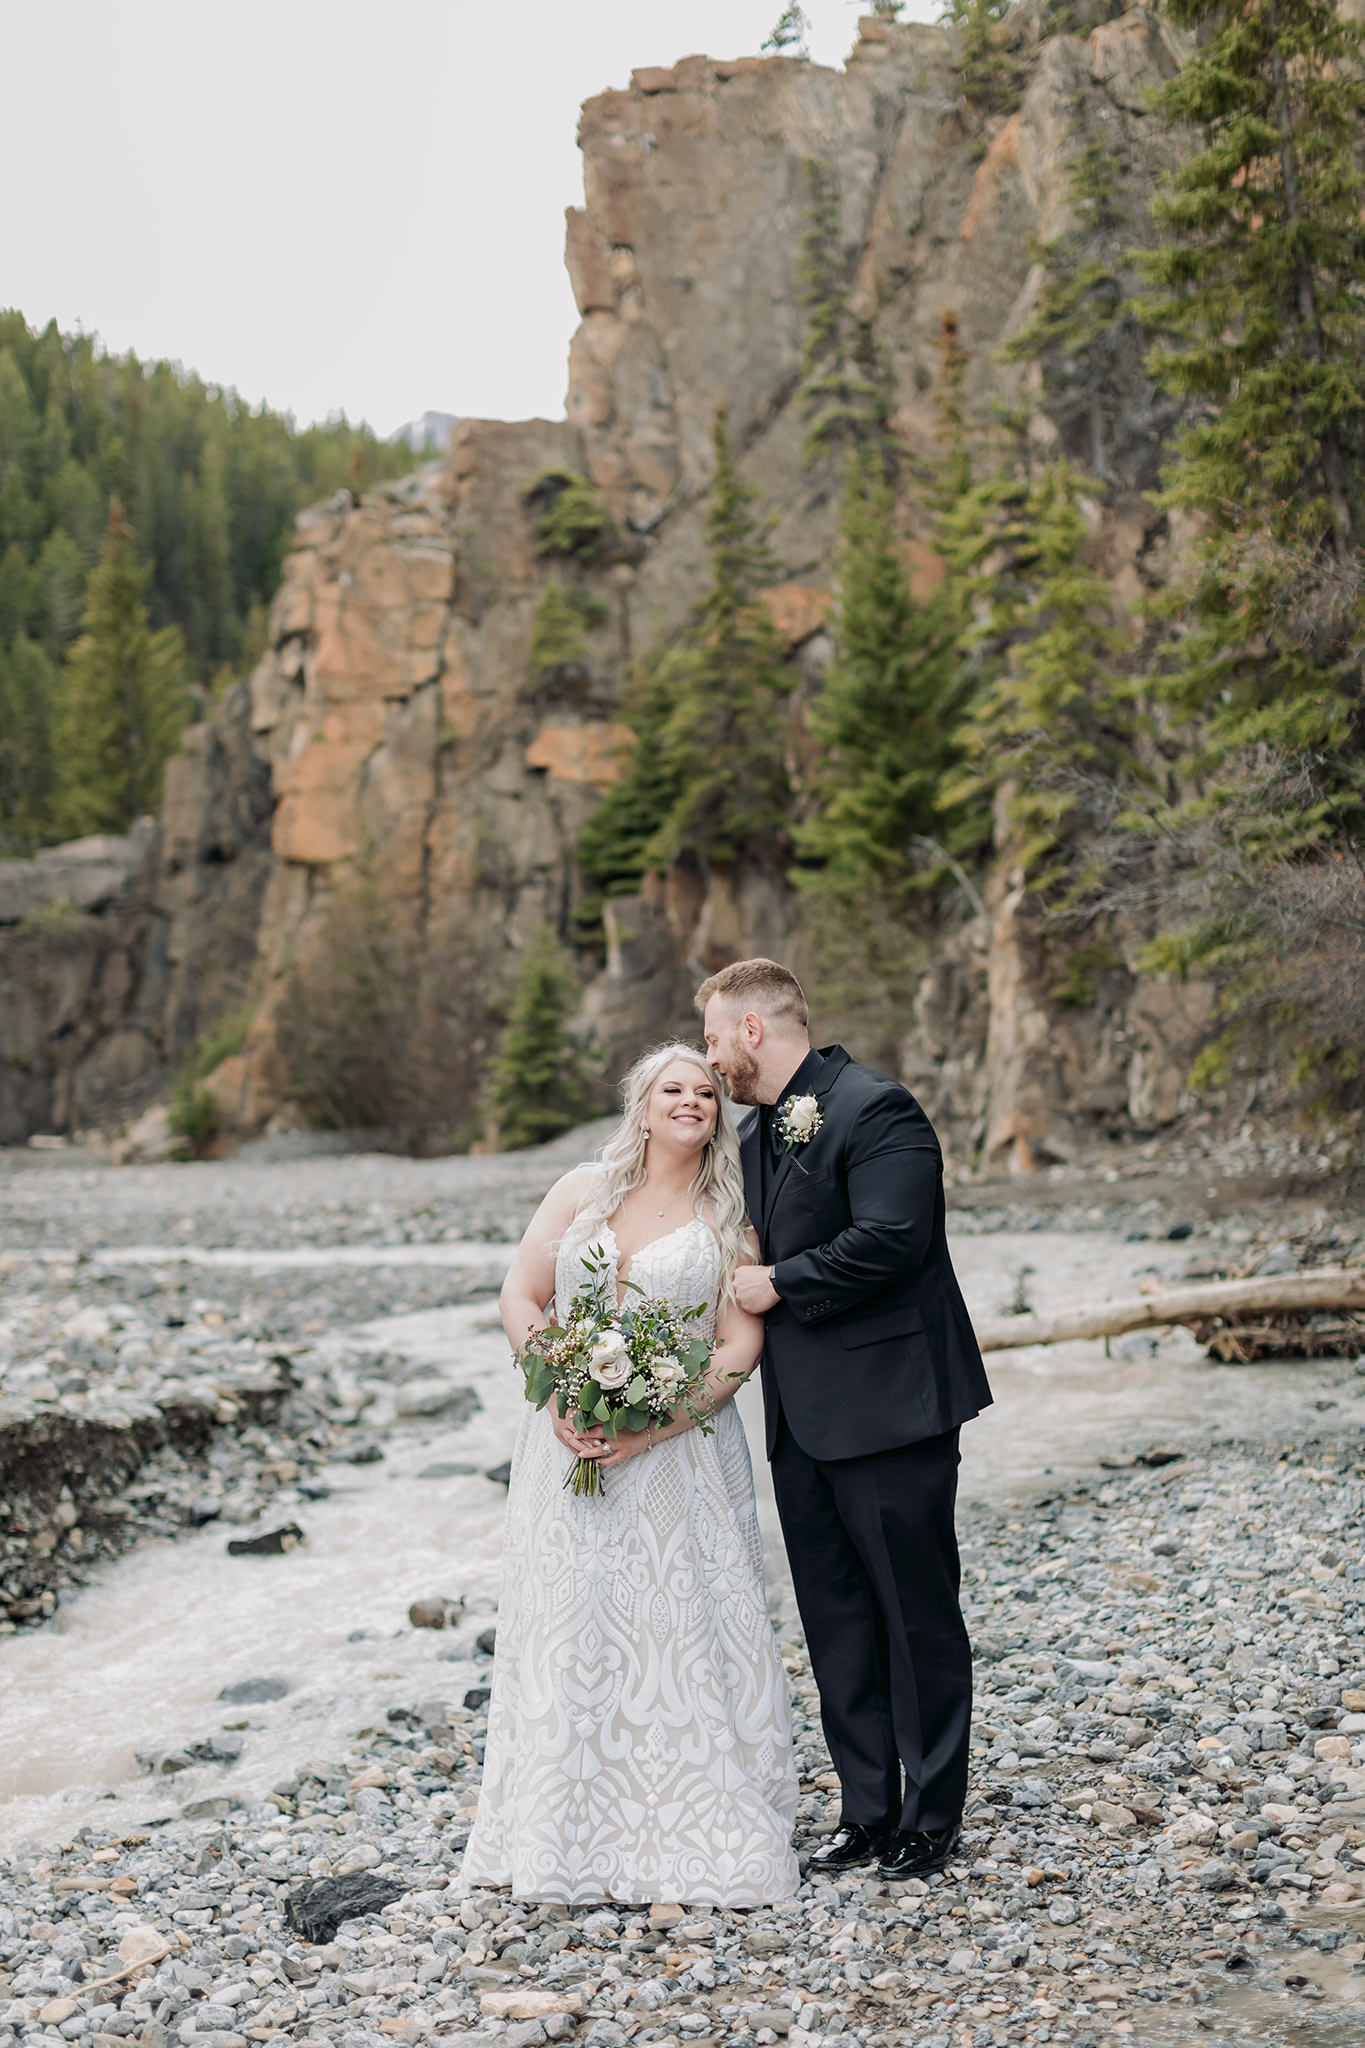 Abraham Lake Spring Mountain wedding portraits at Allstones Creek